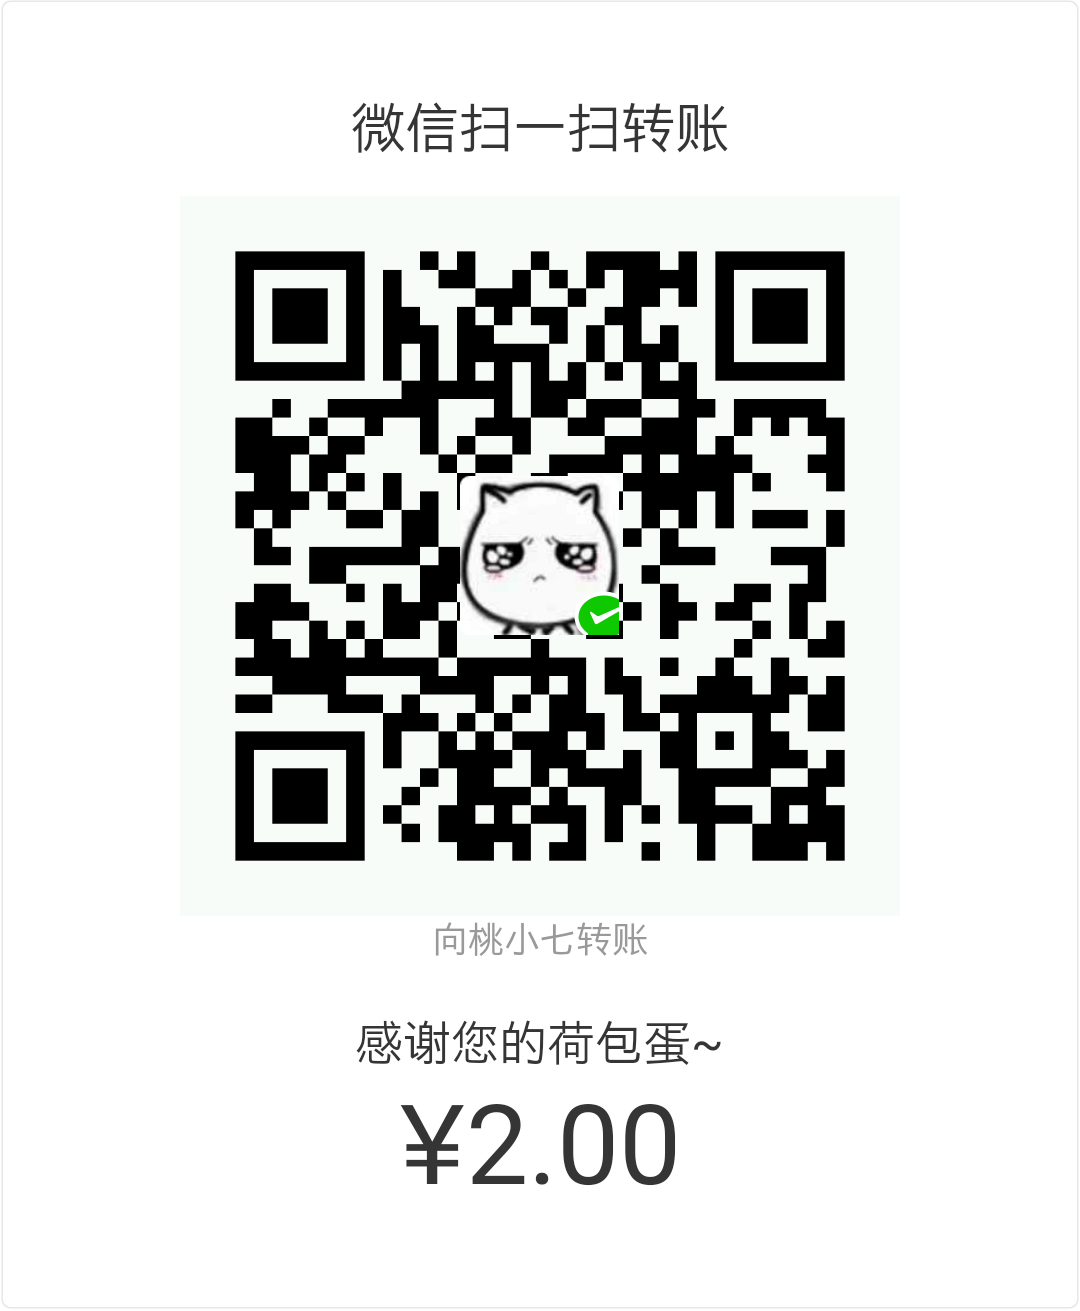 桃小七 WeChat Pay